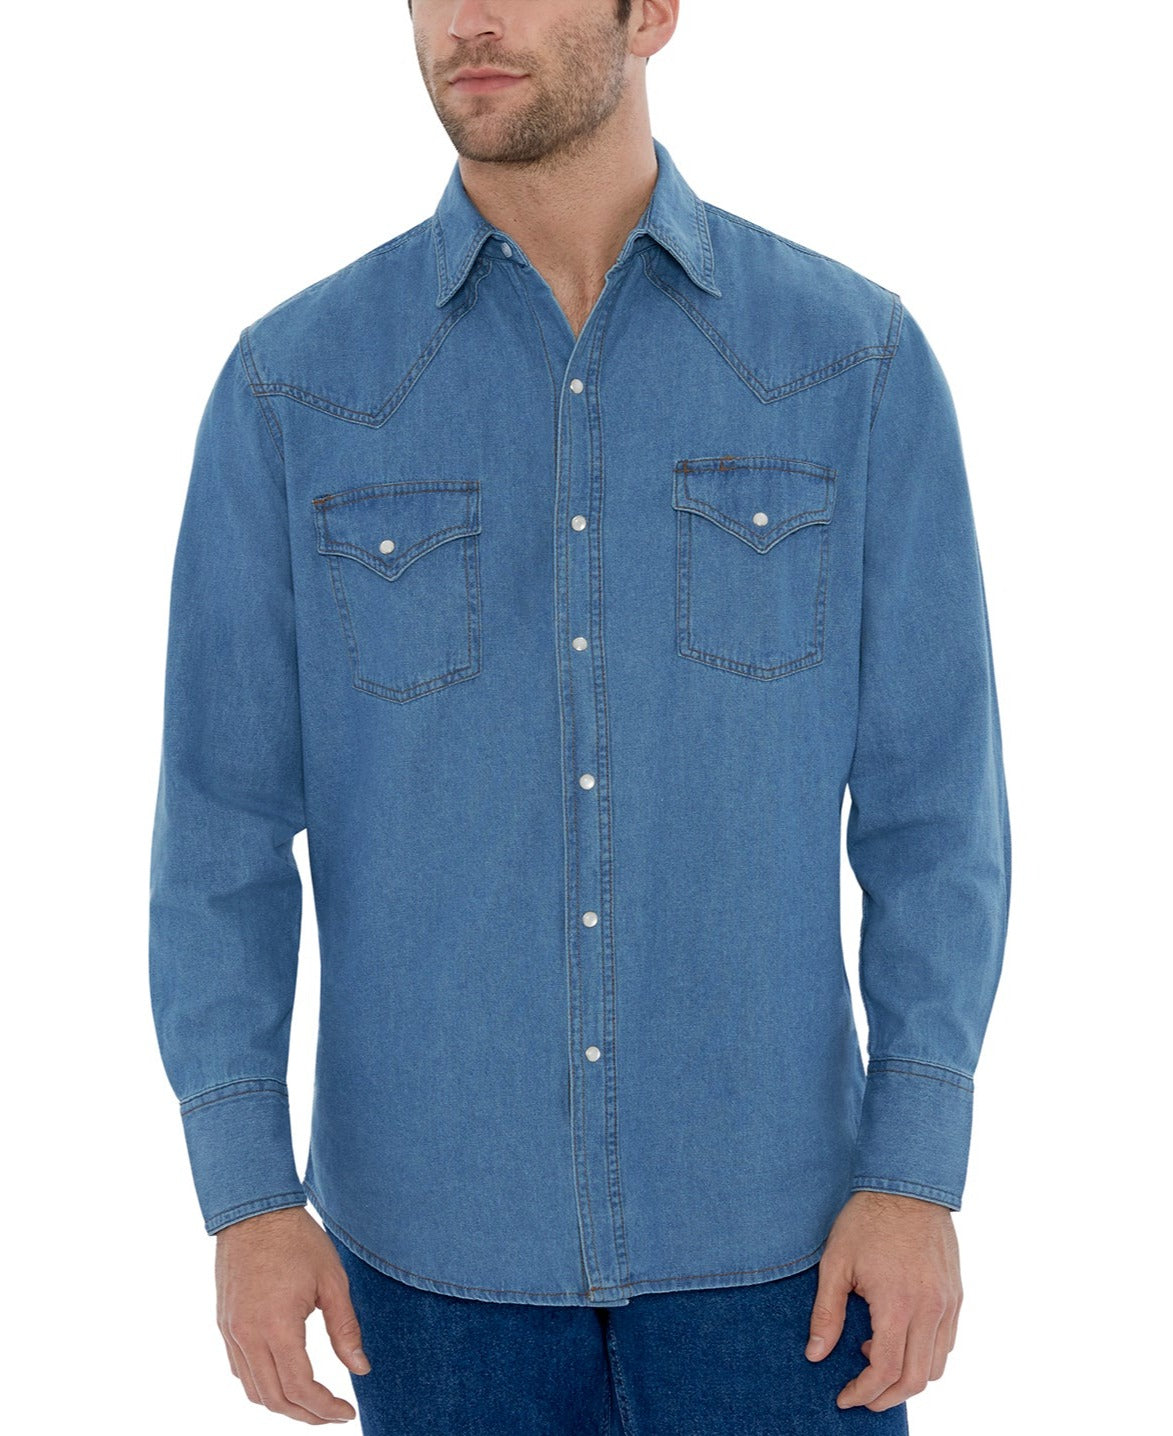 Buy UCLA Light Blue Washed Denim Shirt - Shirts for Men 1338068 | Myntra